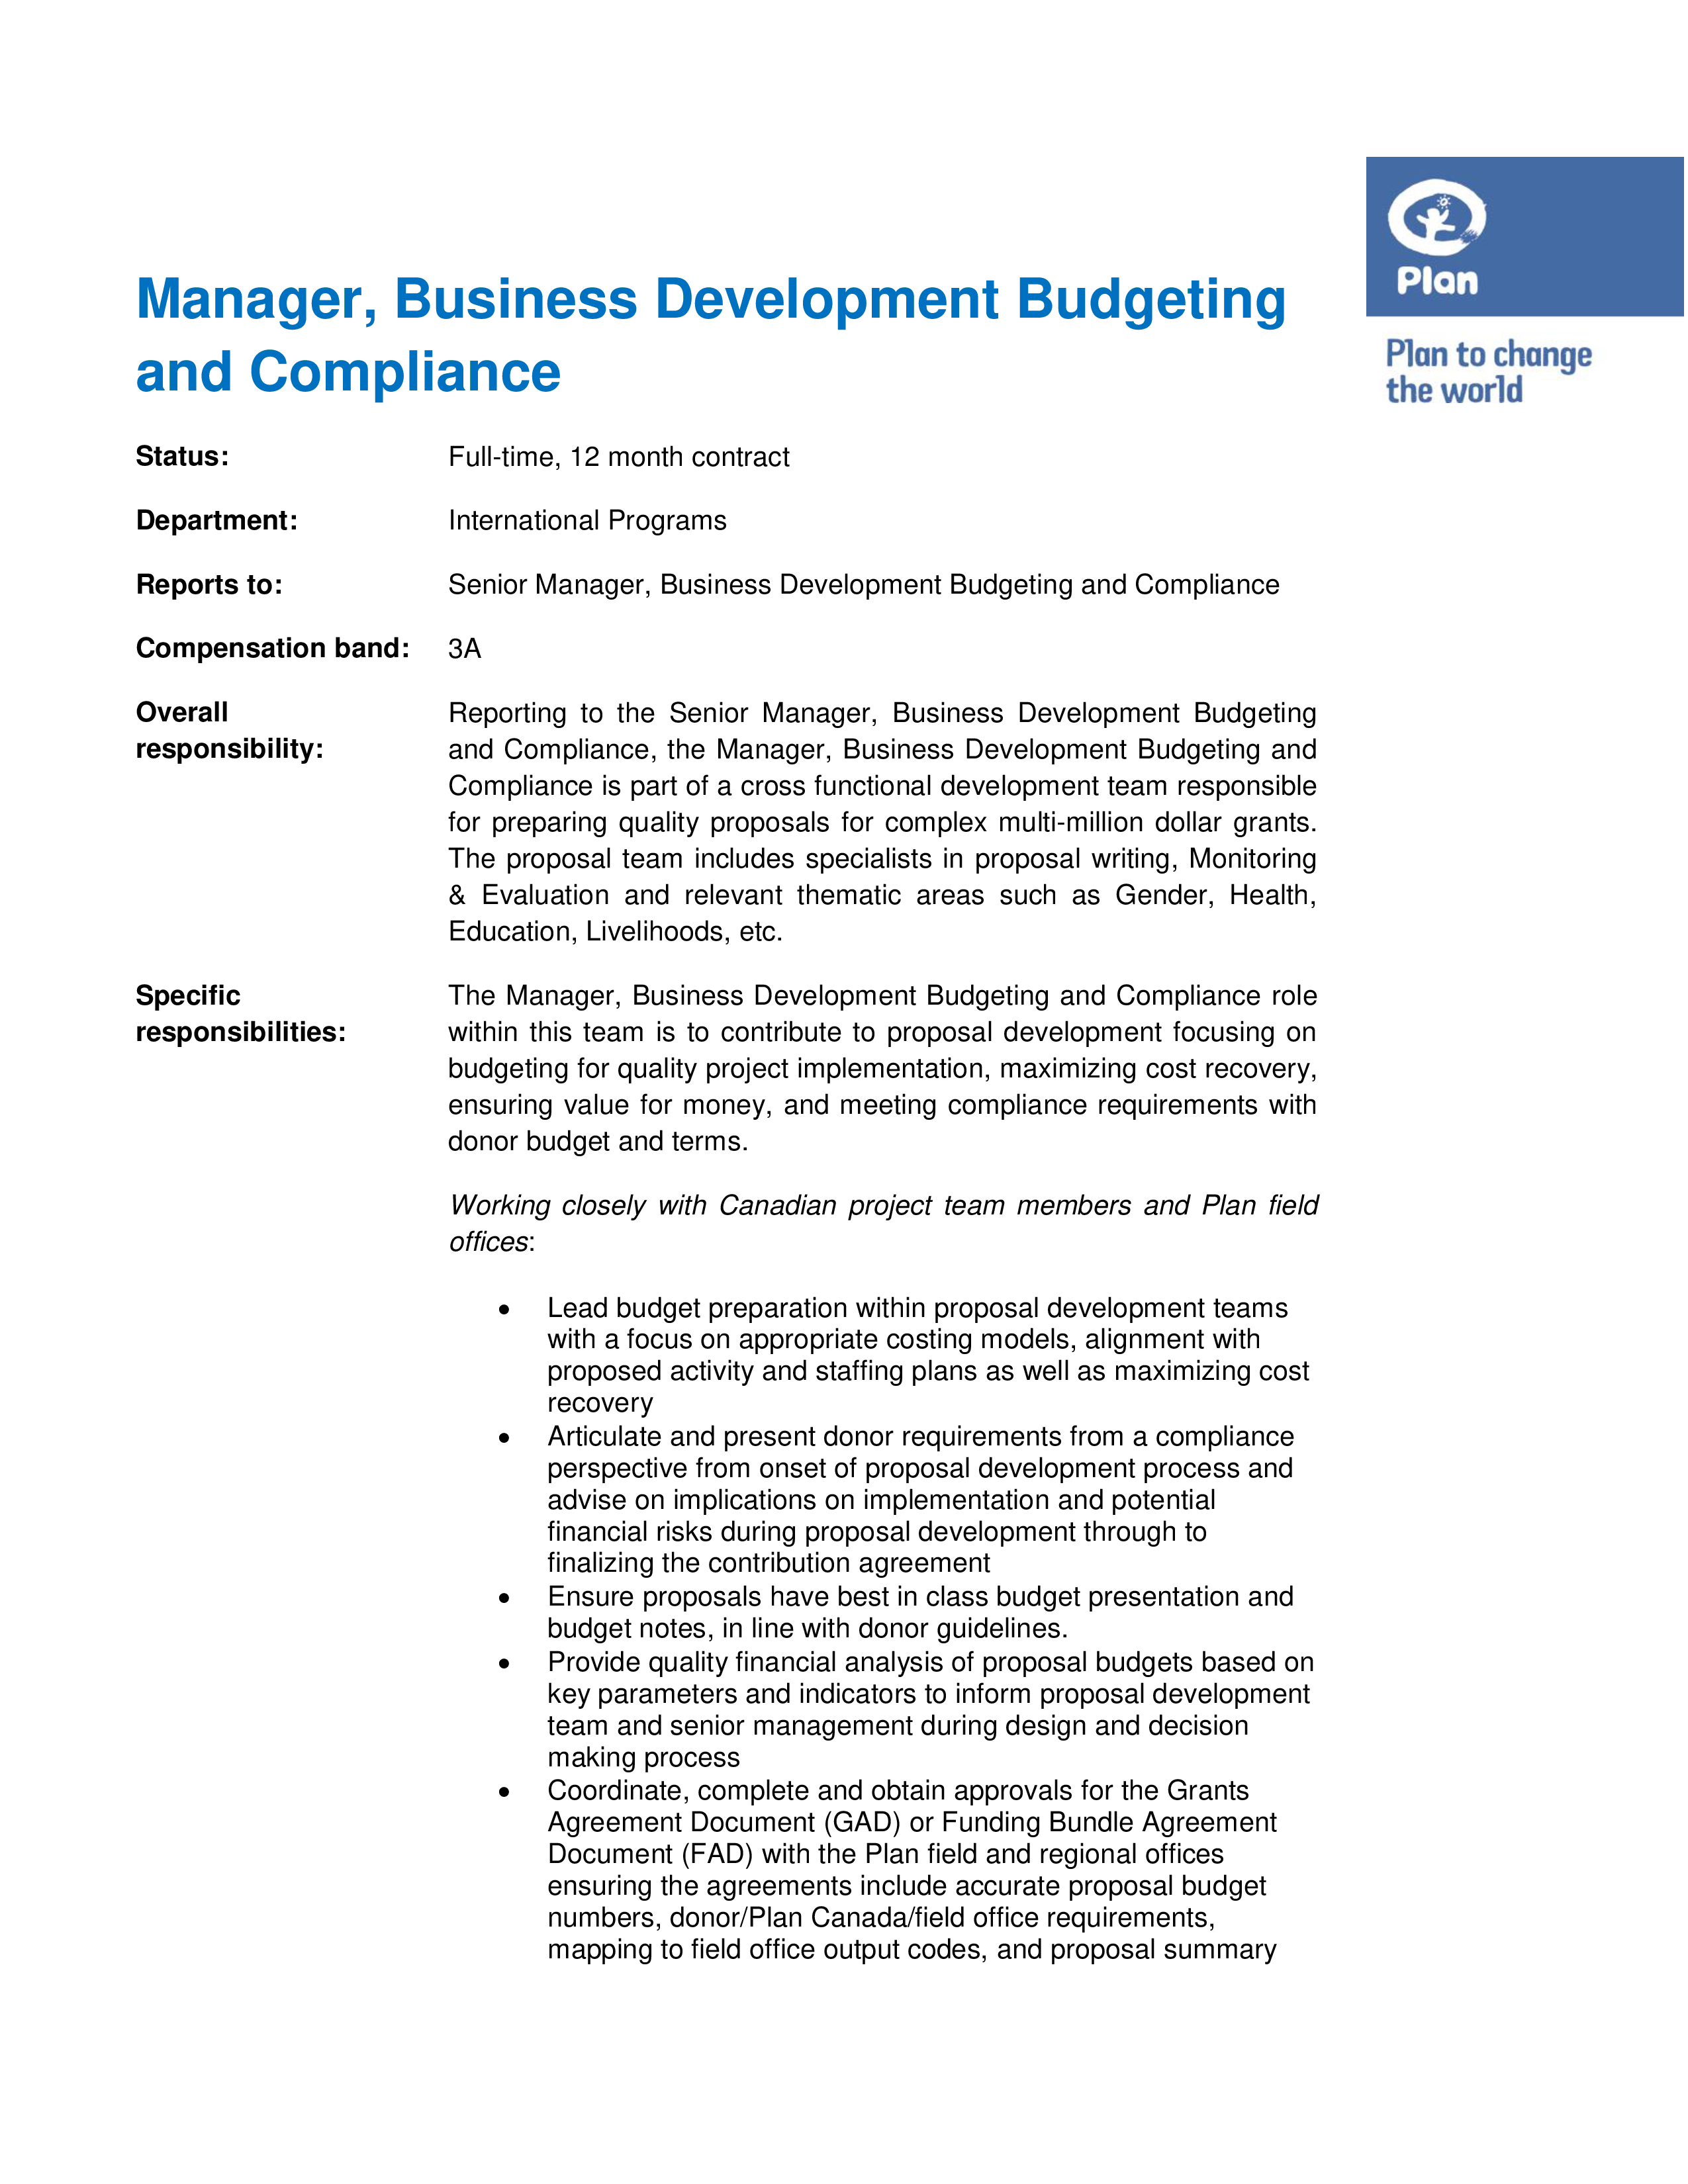 Business Development Budget Templates at allbusinesstemplates com